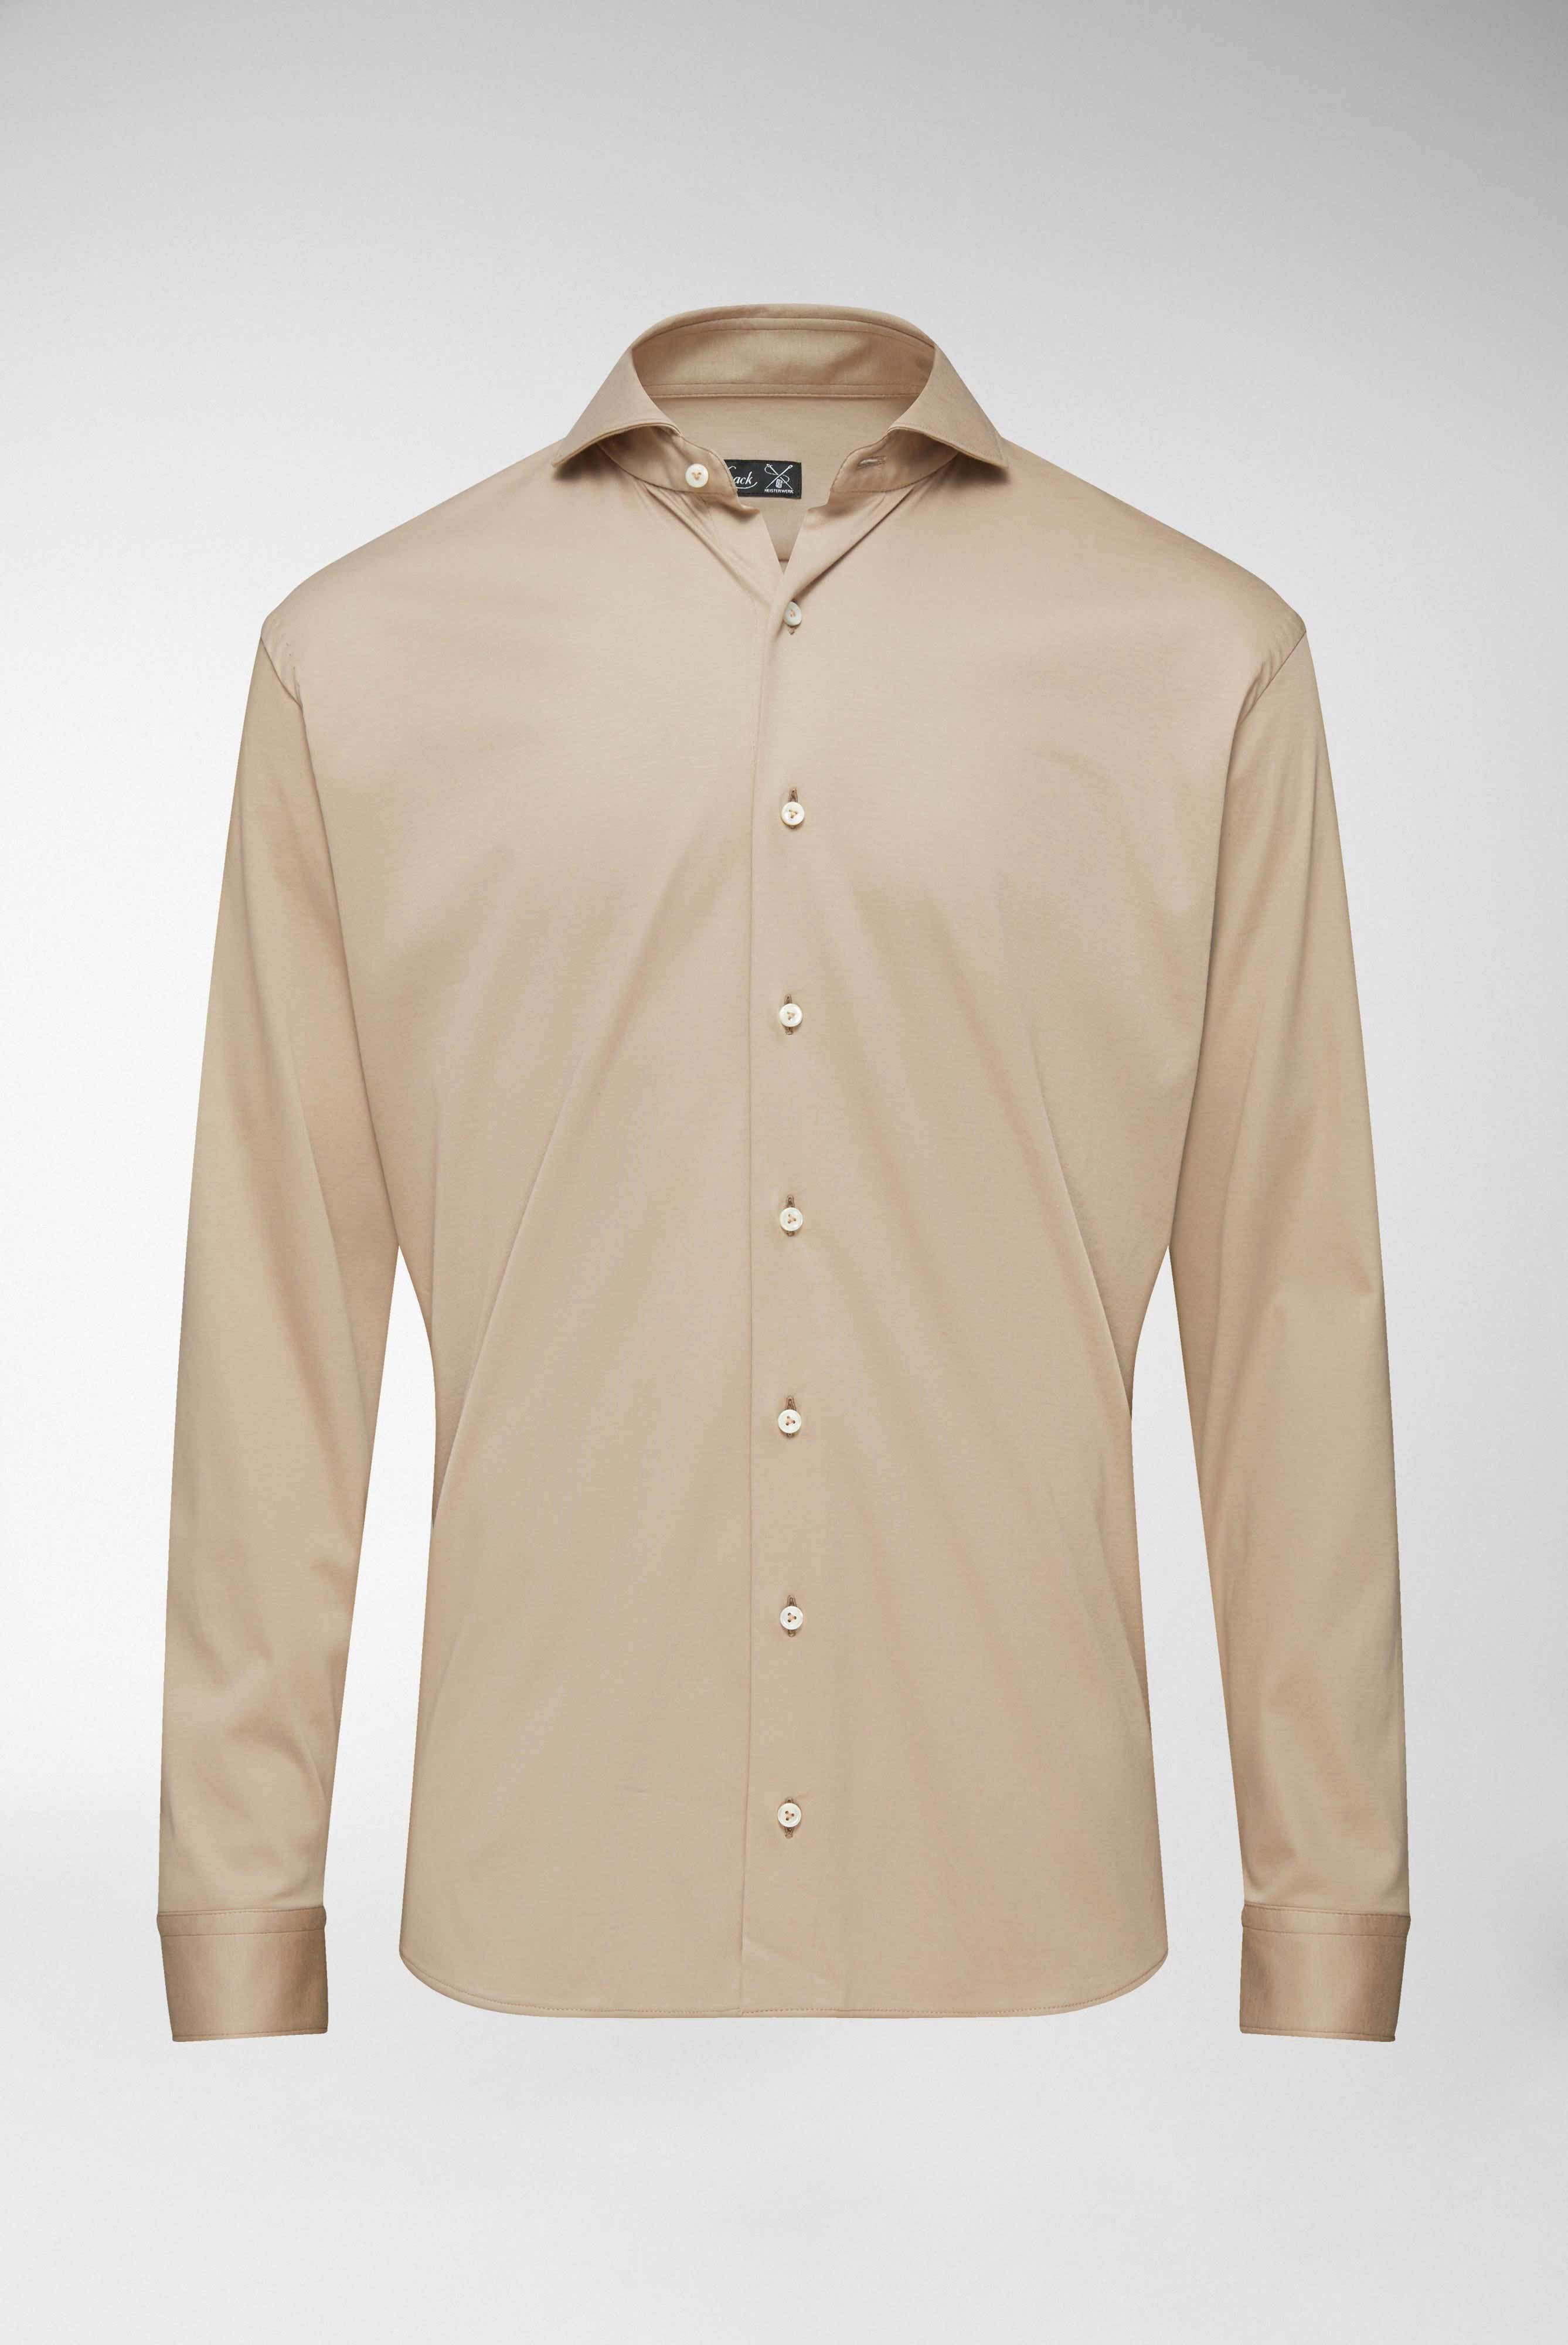 Casual Shirts+Jersey Shirt Swiss Cotton Tailor Fit+20.1683.UC.180031.140.XL